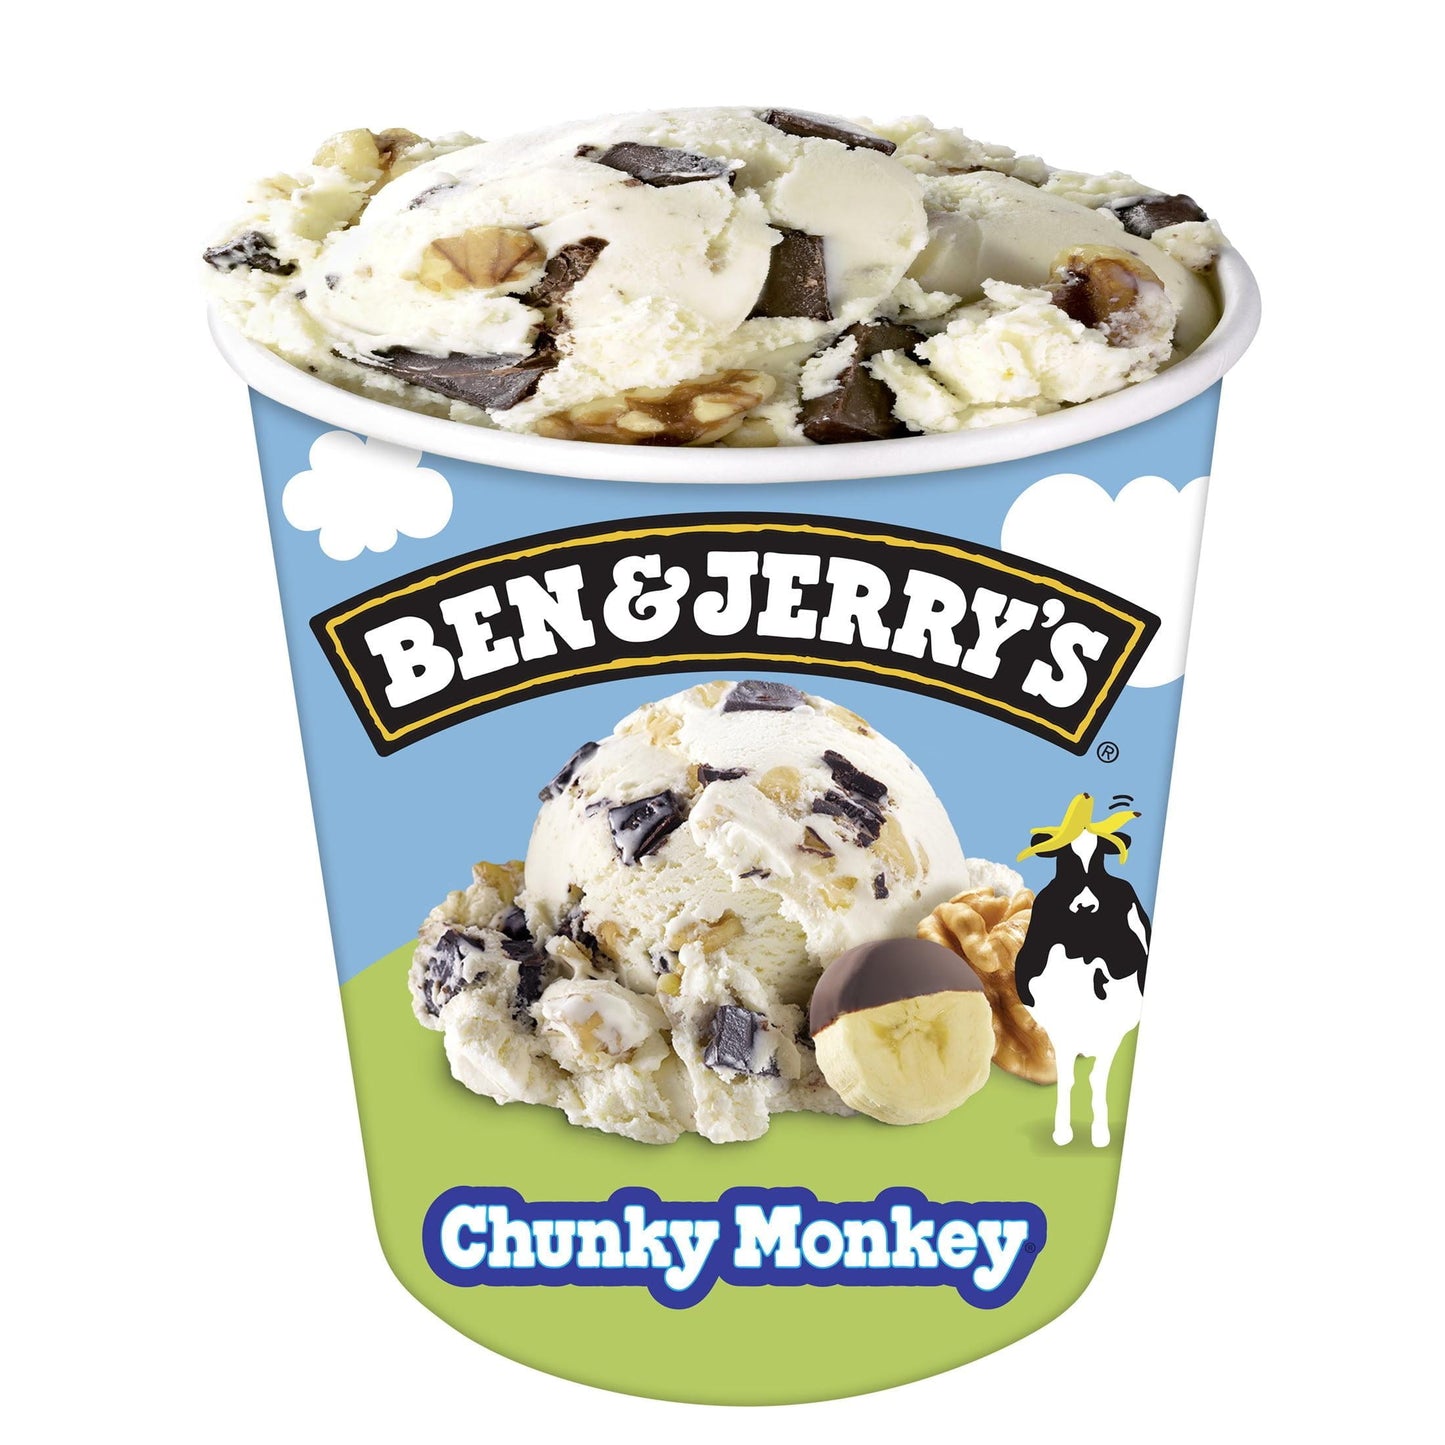 Ben & Jerry's Chunky Monkey Banana Ice Cream, 16 oz